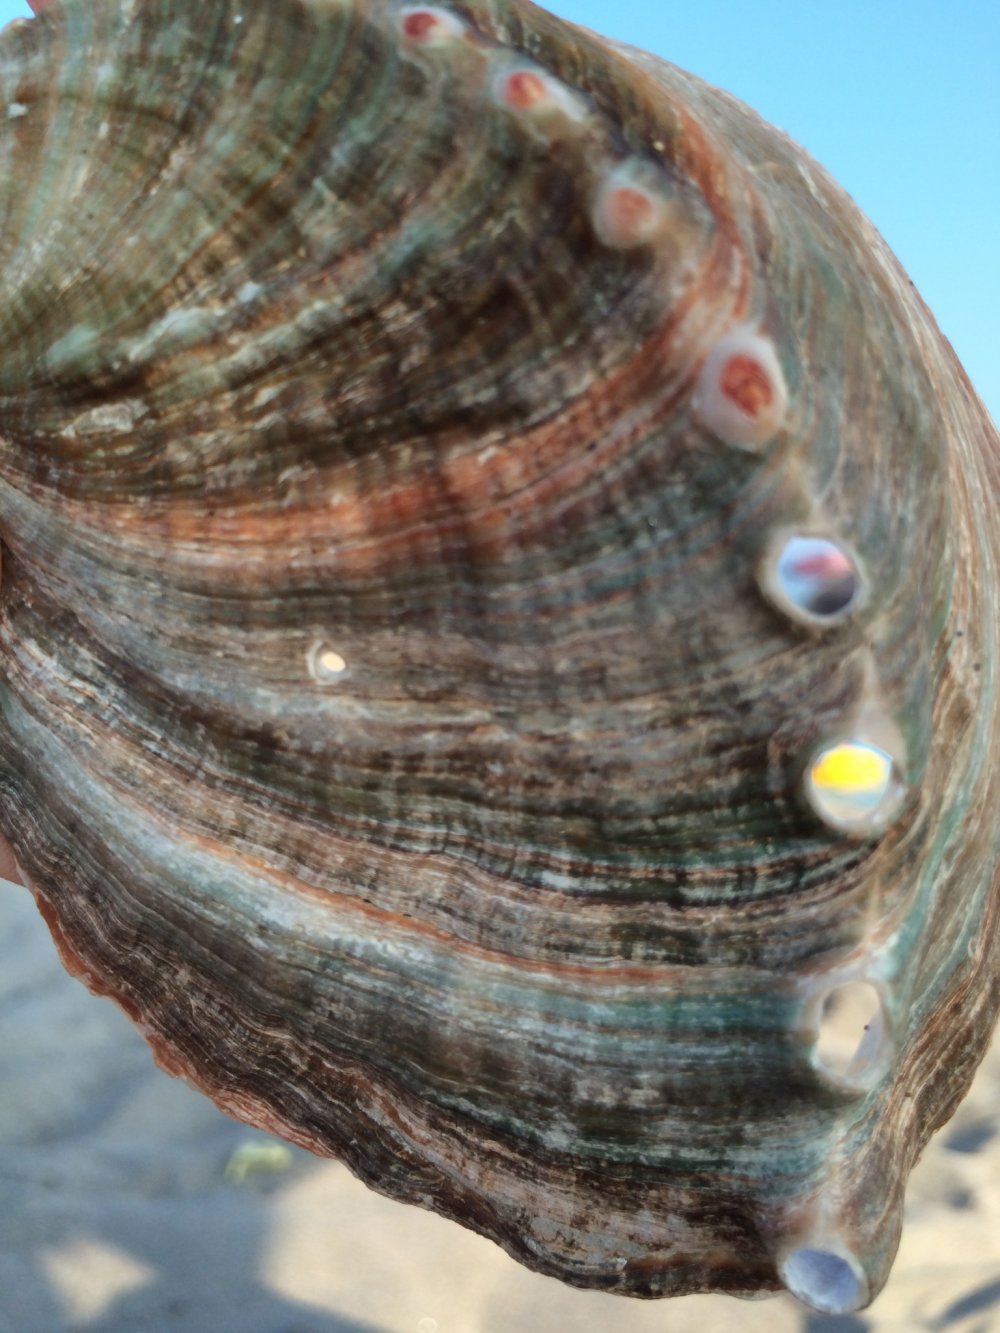 Find some seashells.